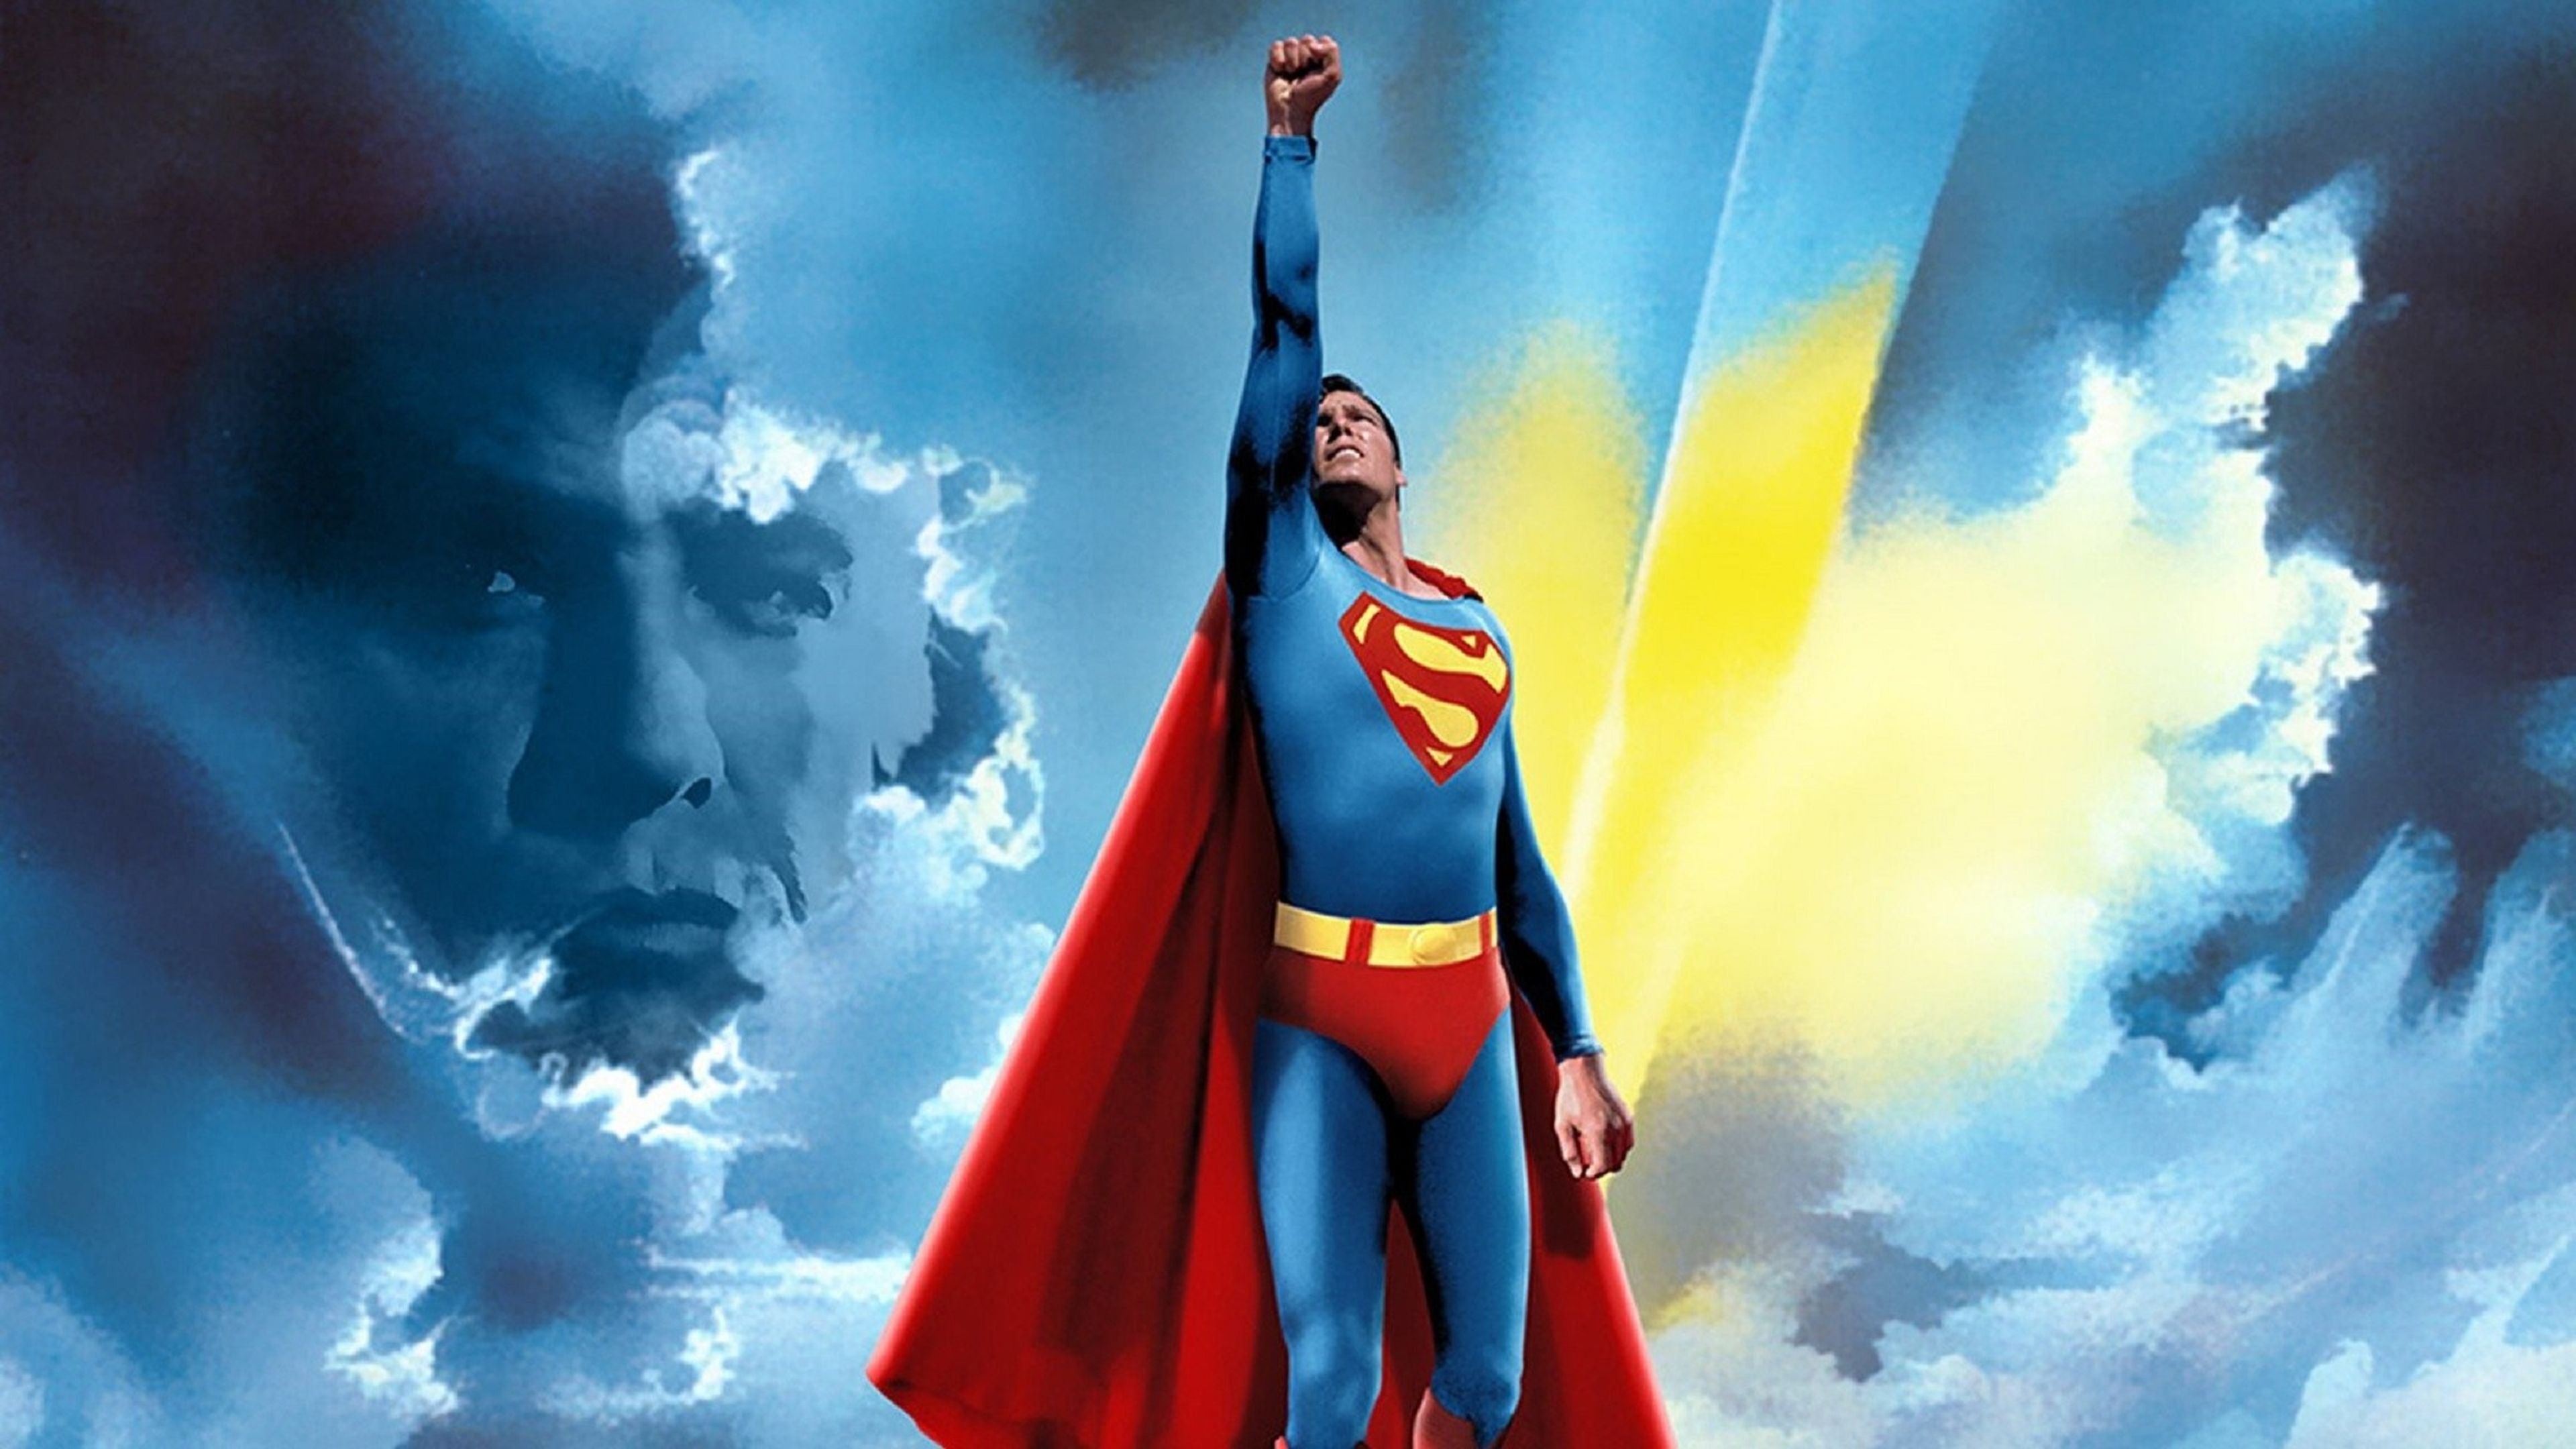 Am super heroes. Супермен 1978. Superman 1978 игра. Супермен Мессия.